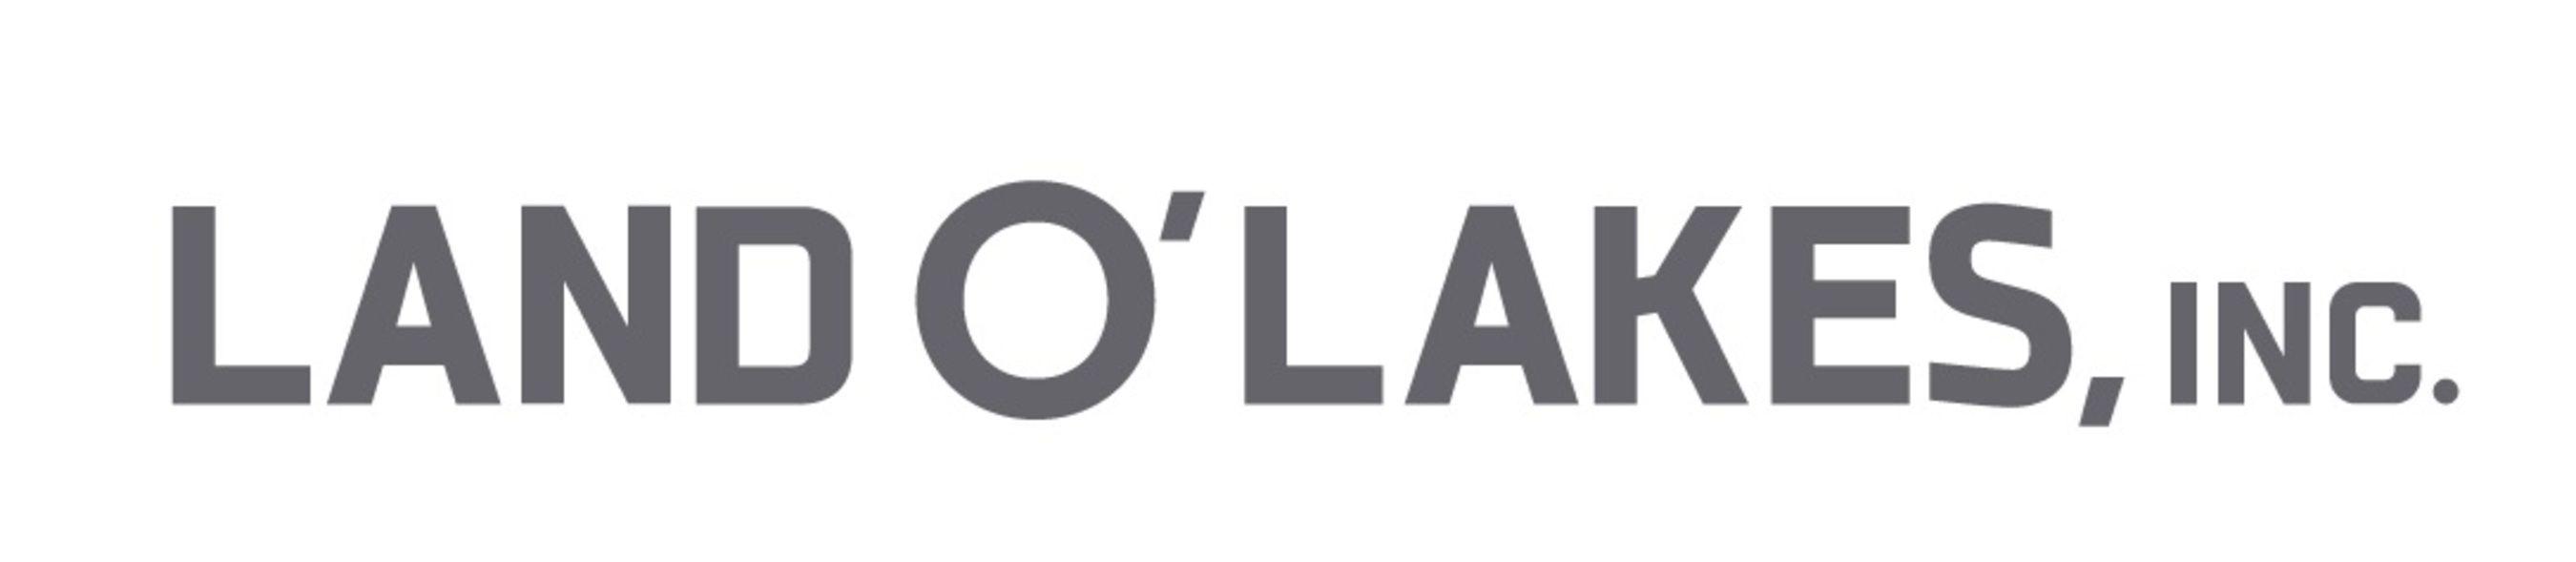 Land O Lakes Logo - Land O'Lakes, Inc. Announces New Sustainability Business Division